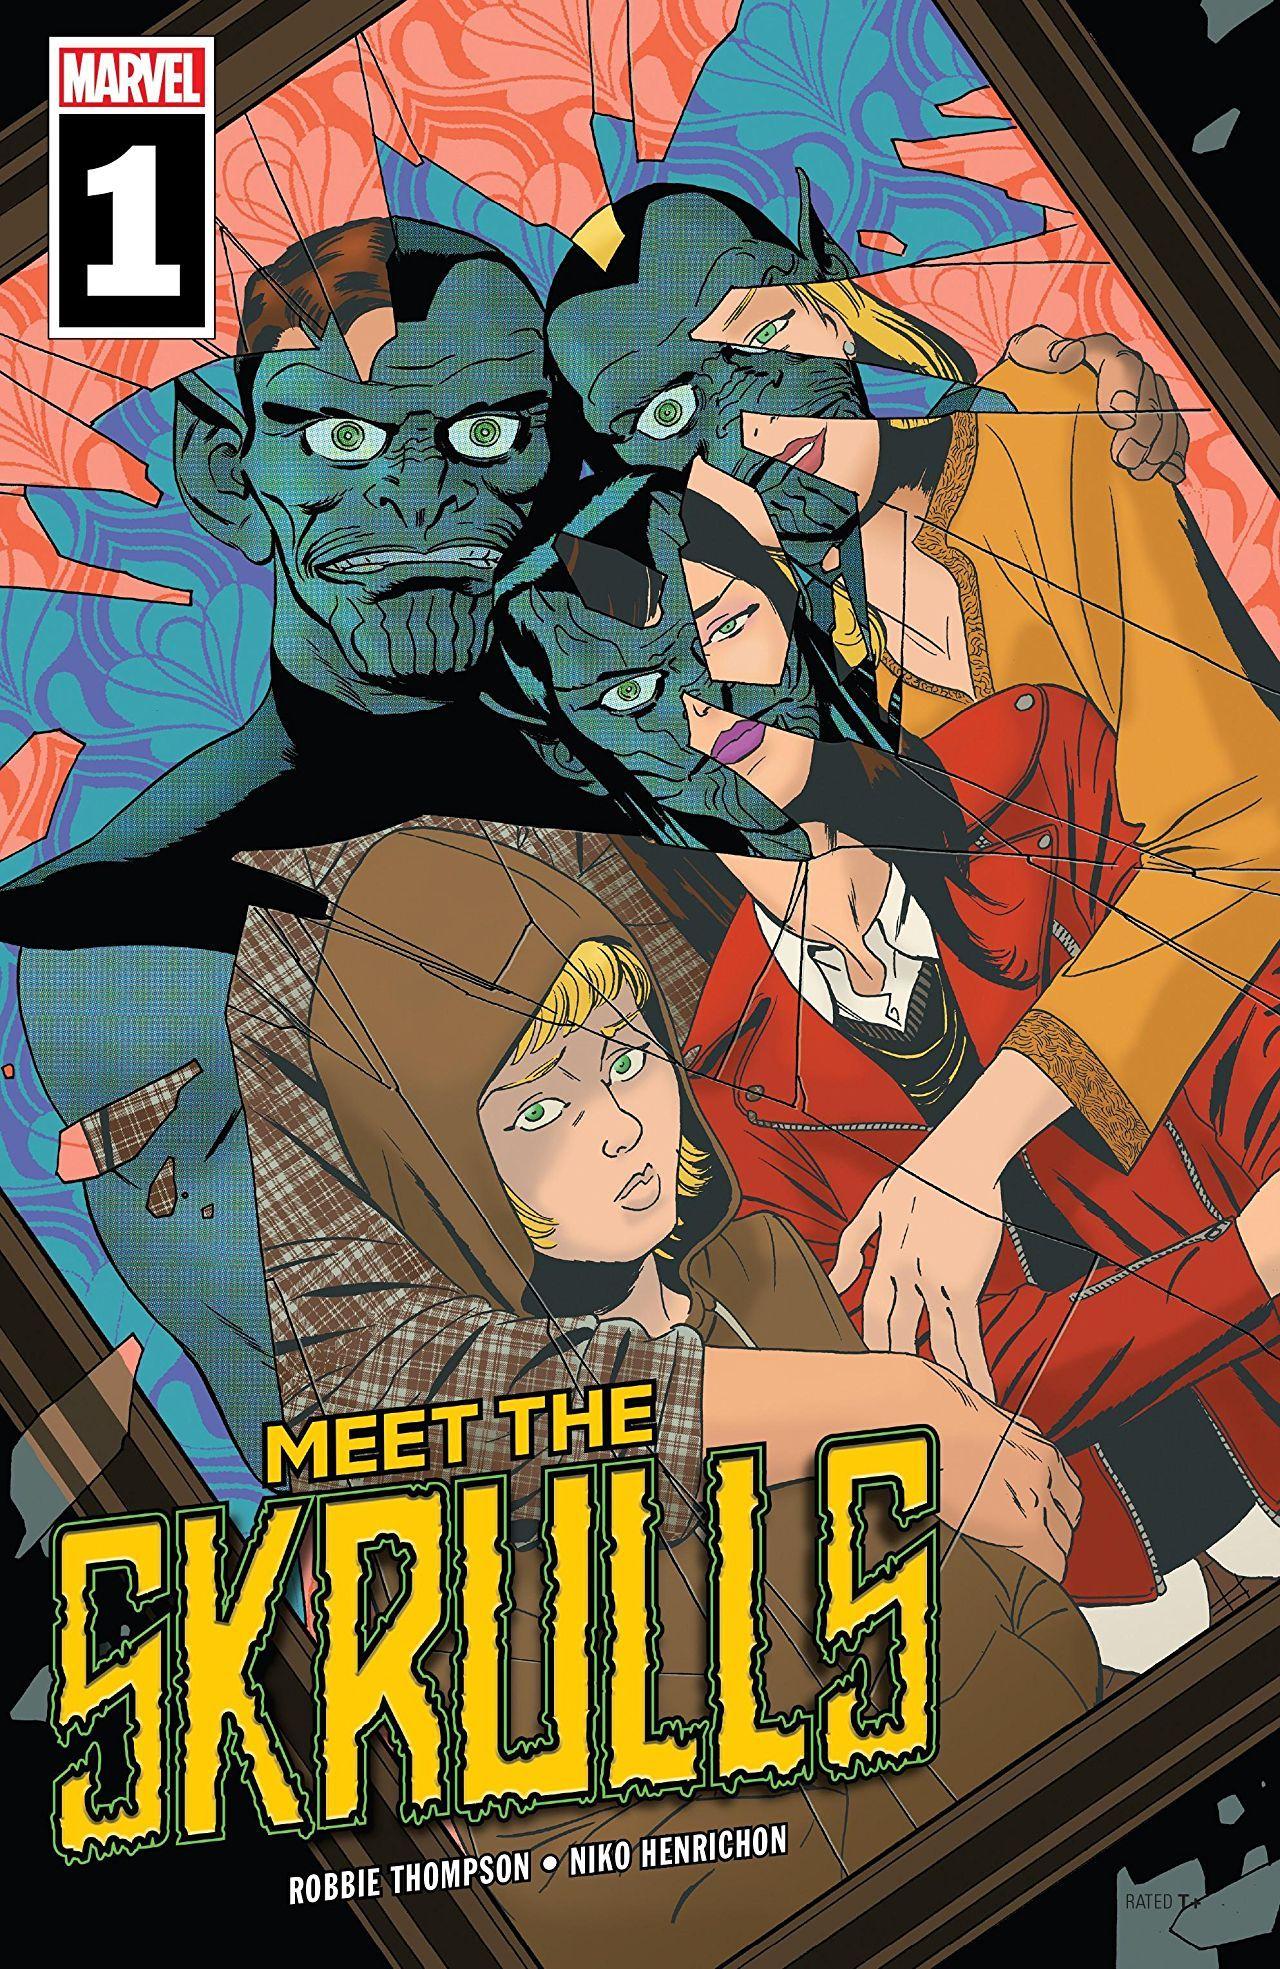 Meet the Skrulls Vol. 1 #1